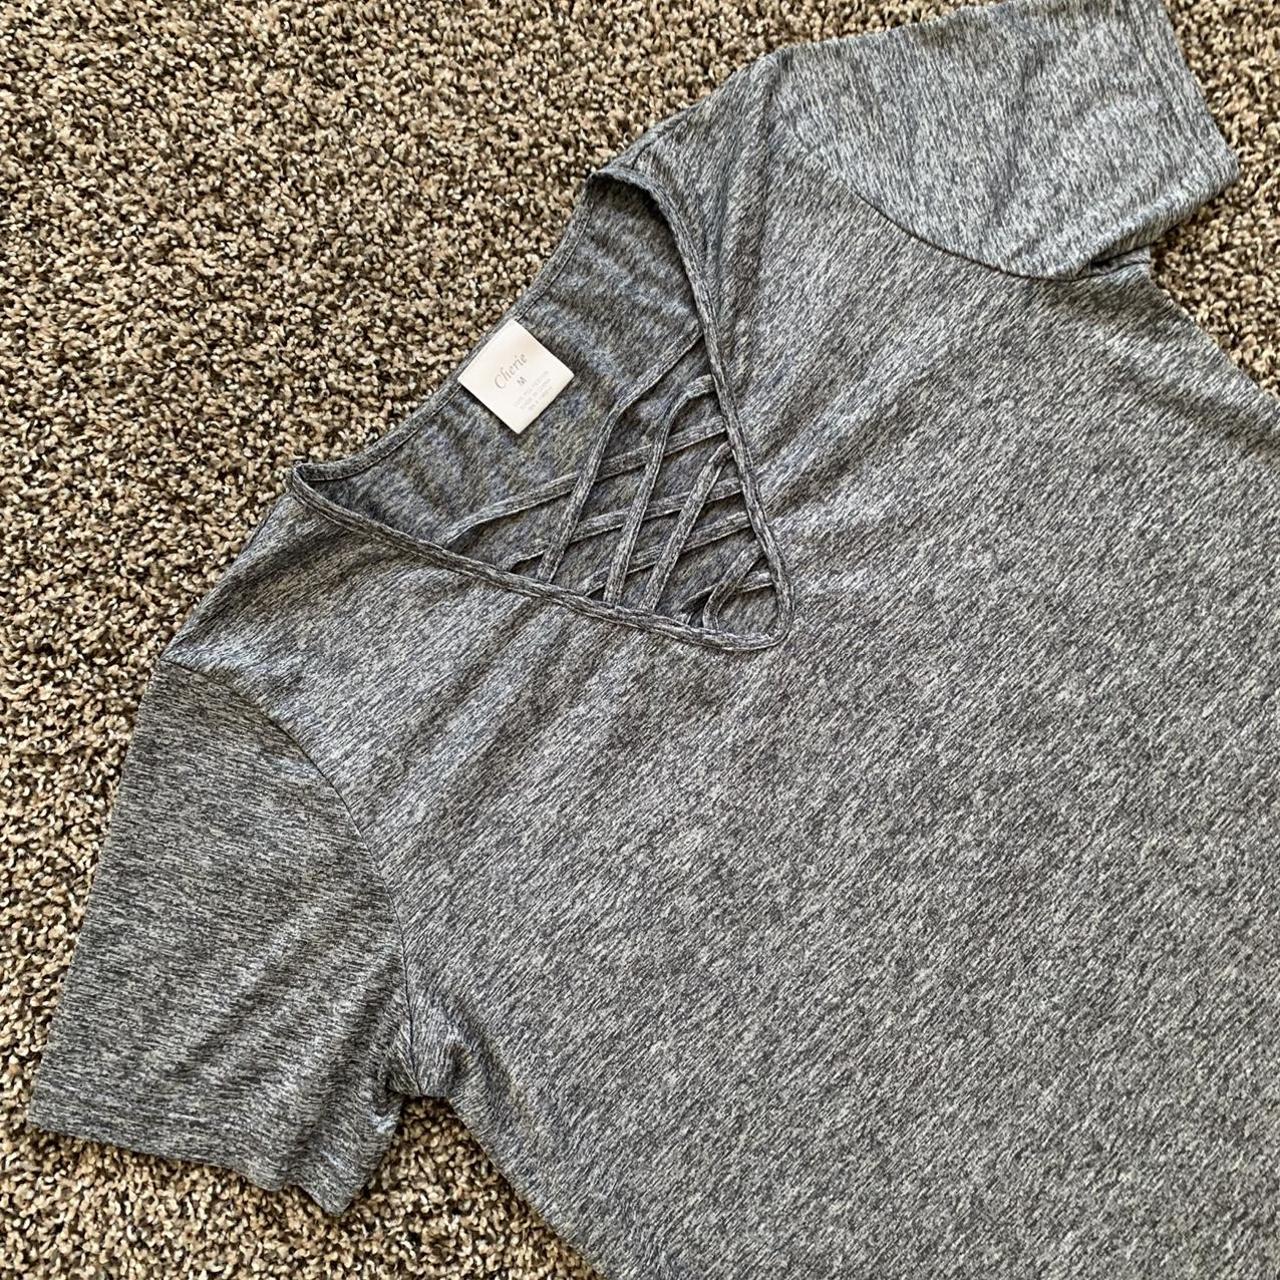 Cherie Amie Women's Grey and Black T-shirt (5)